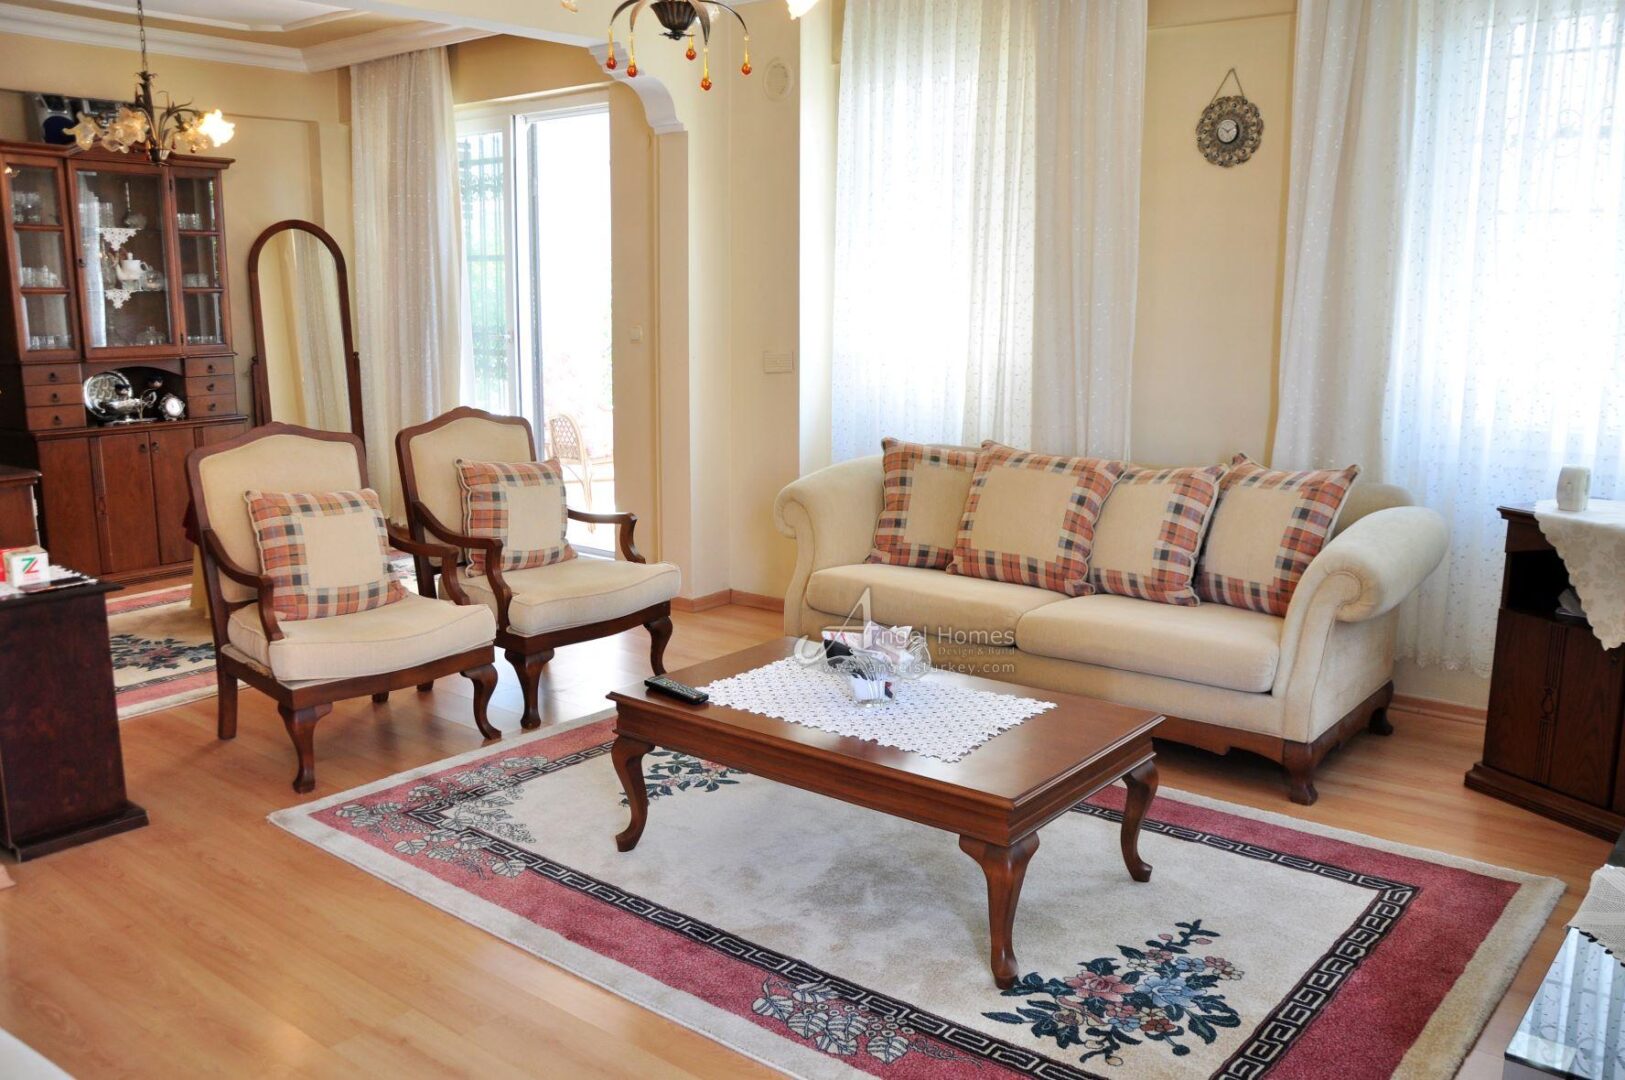 apartment for sale in Tuzla